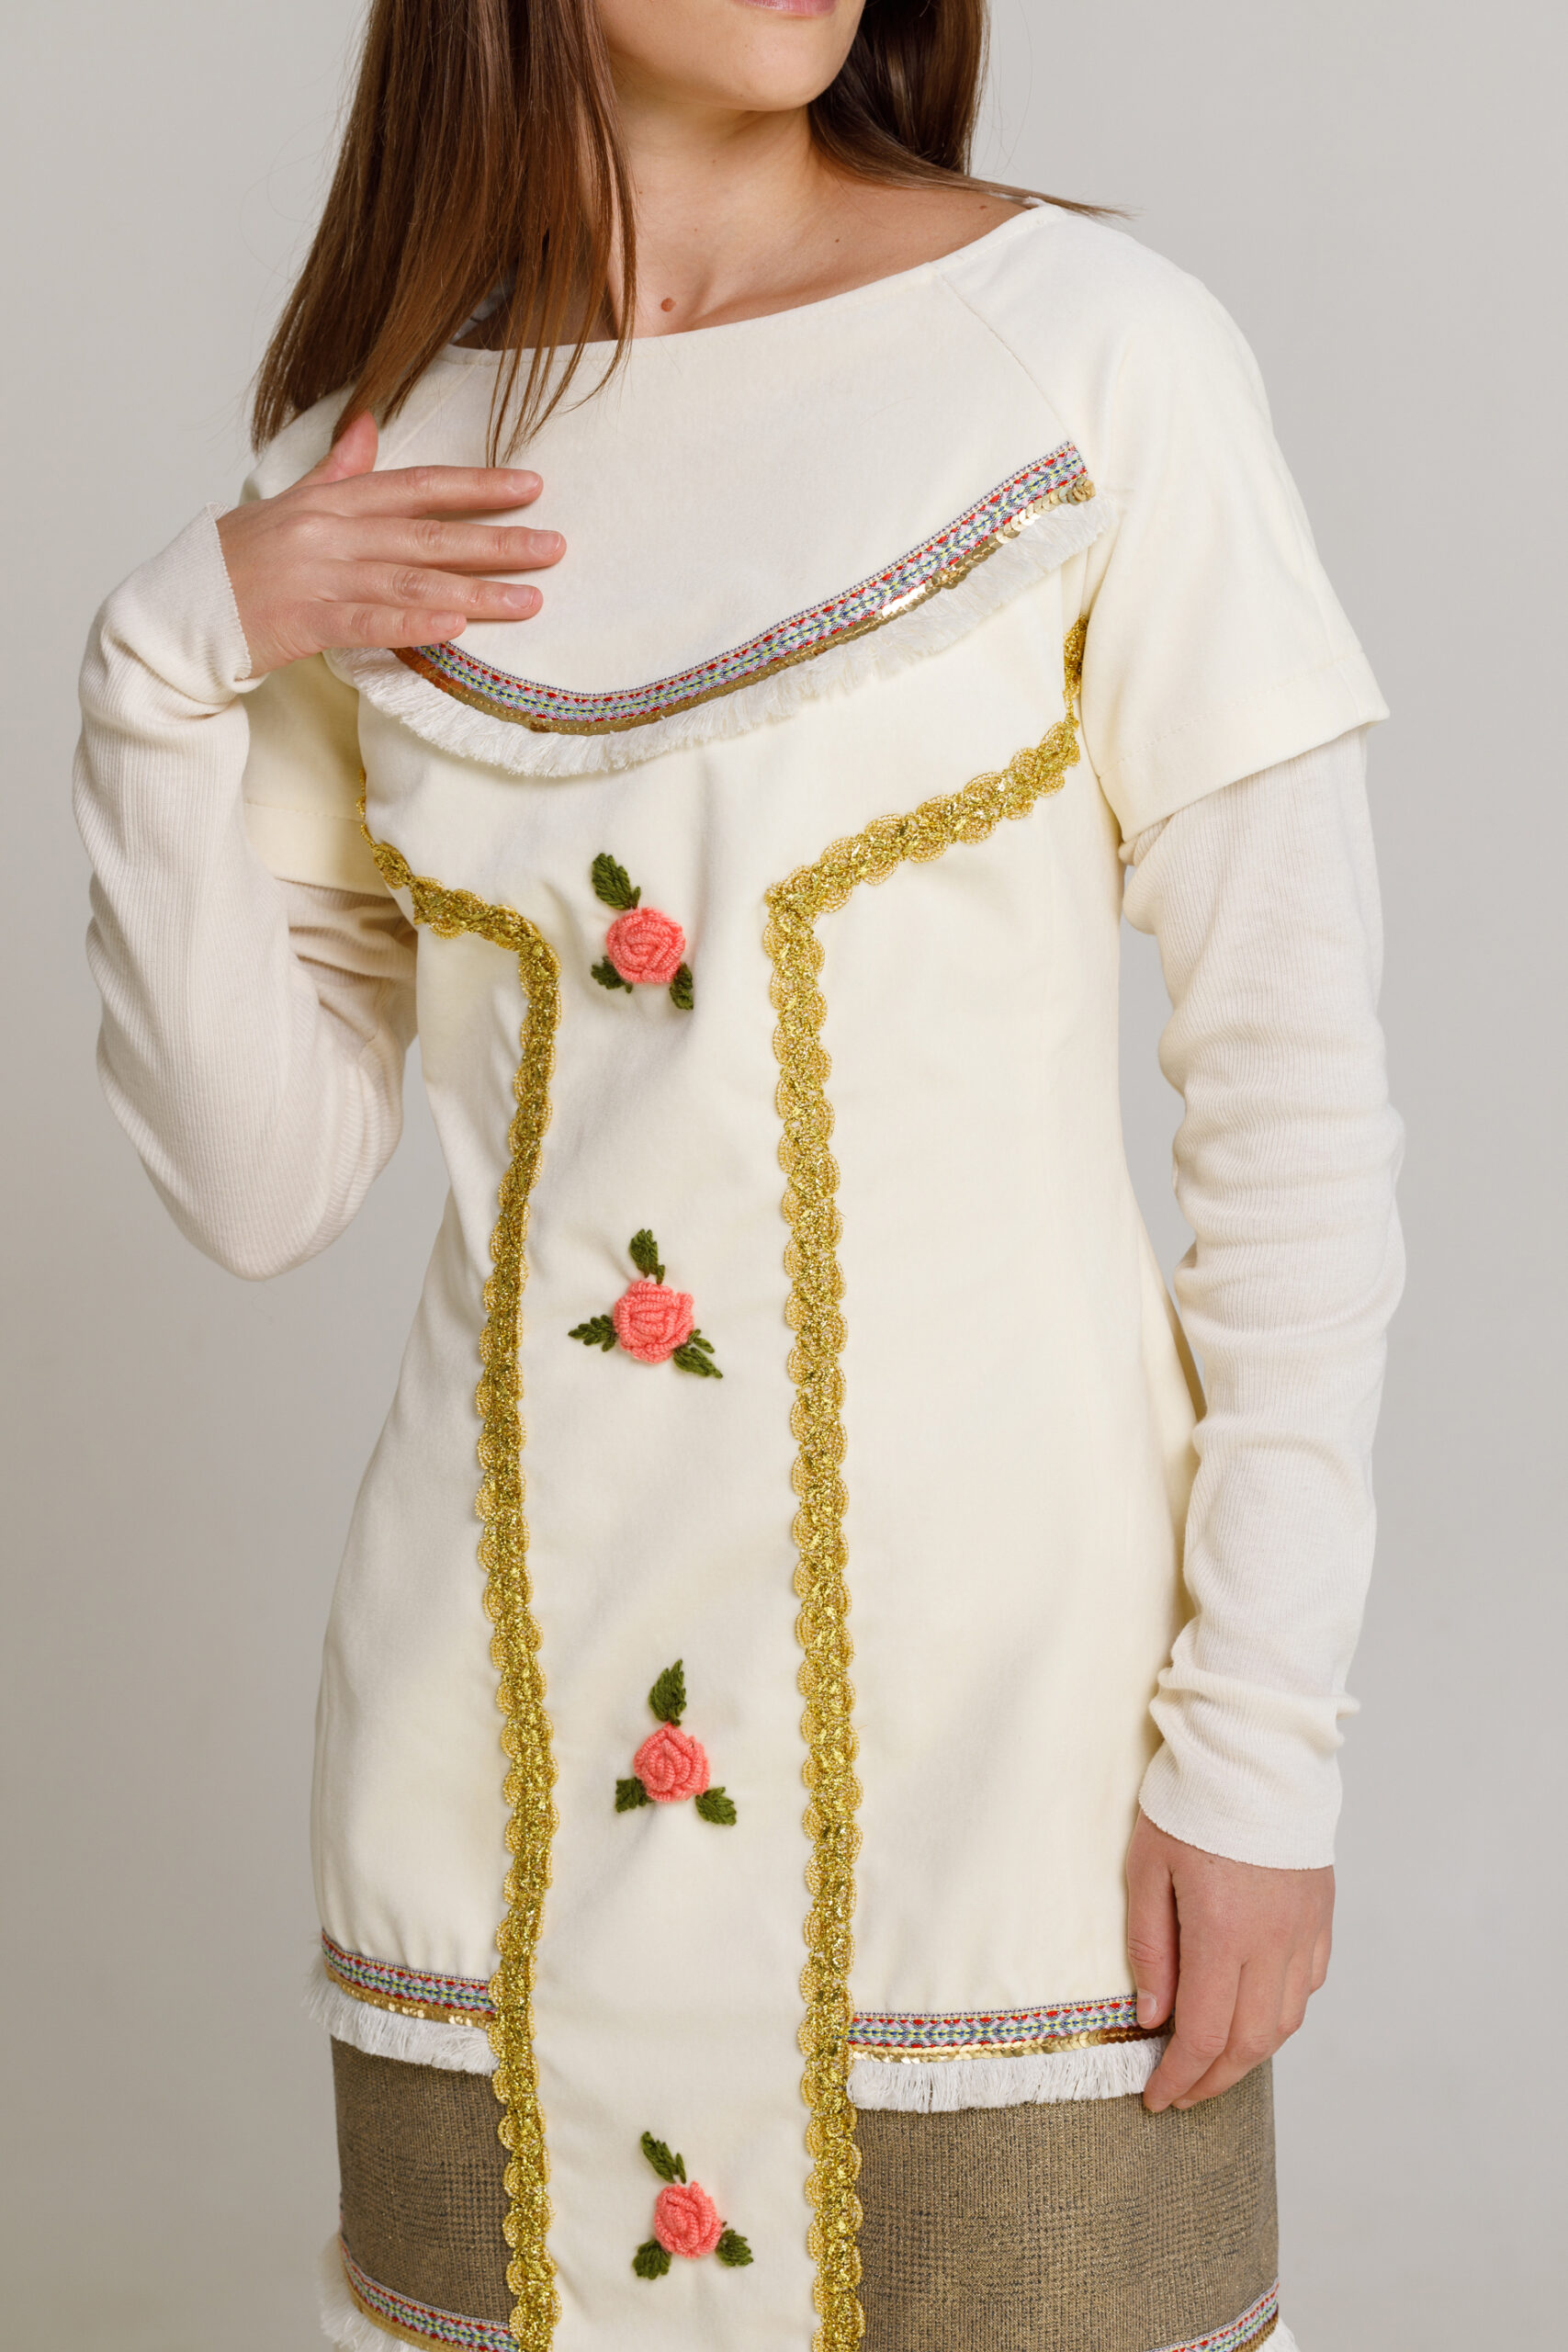 DRESS SASHA elegant white velvet. Natural fabrics, original design, handmade embroidery